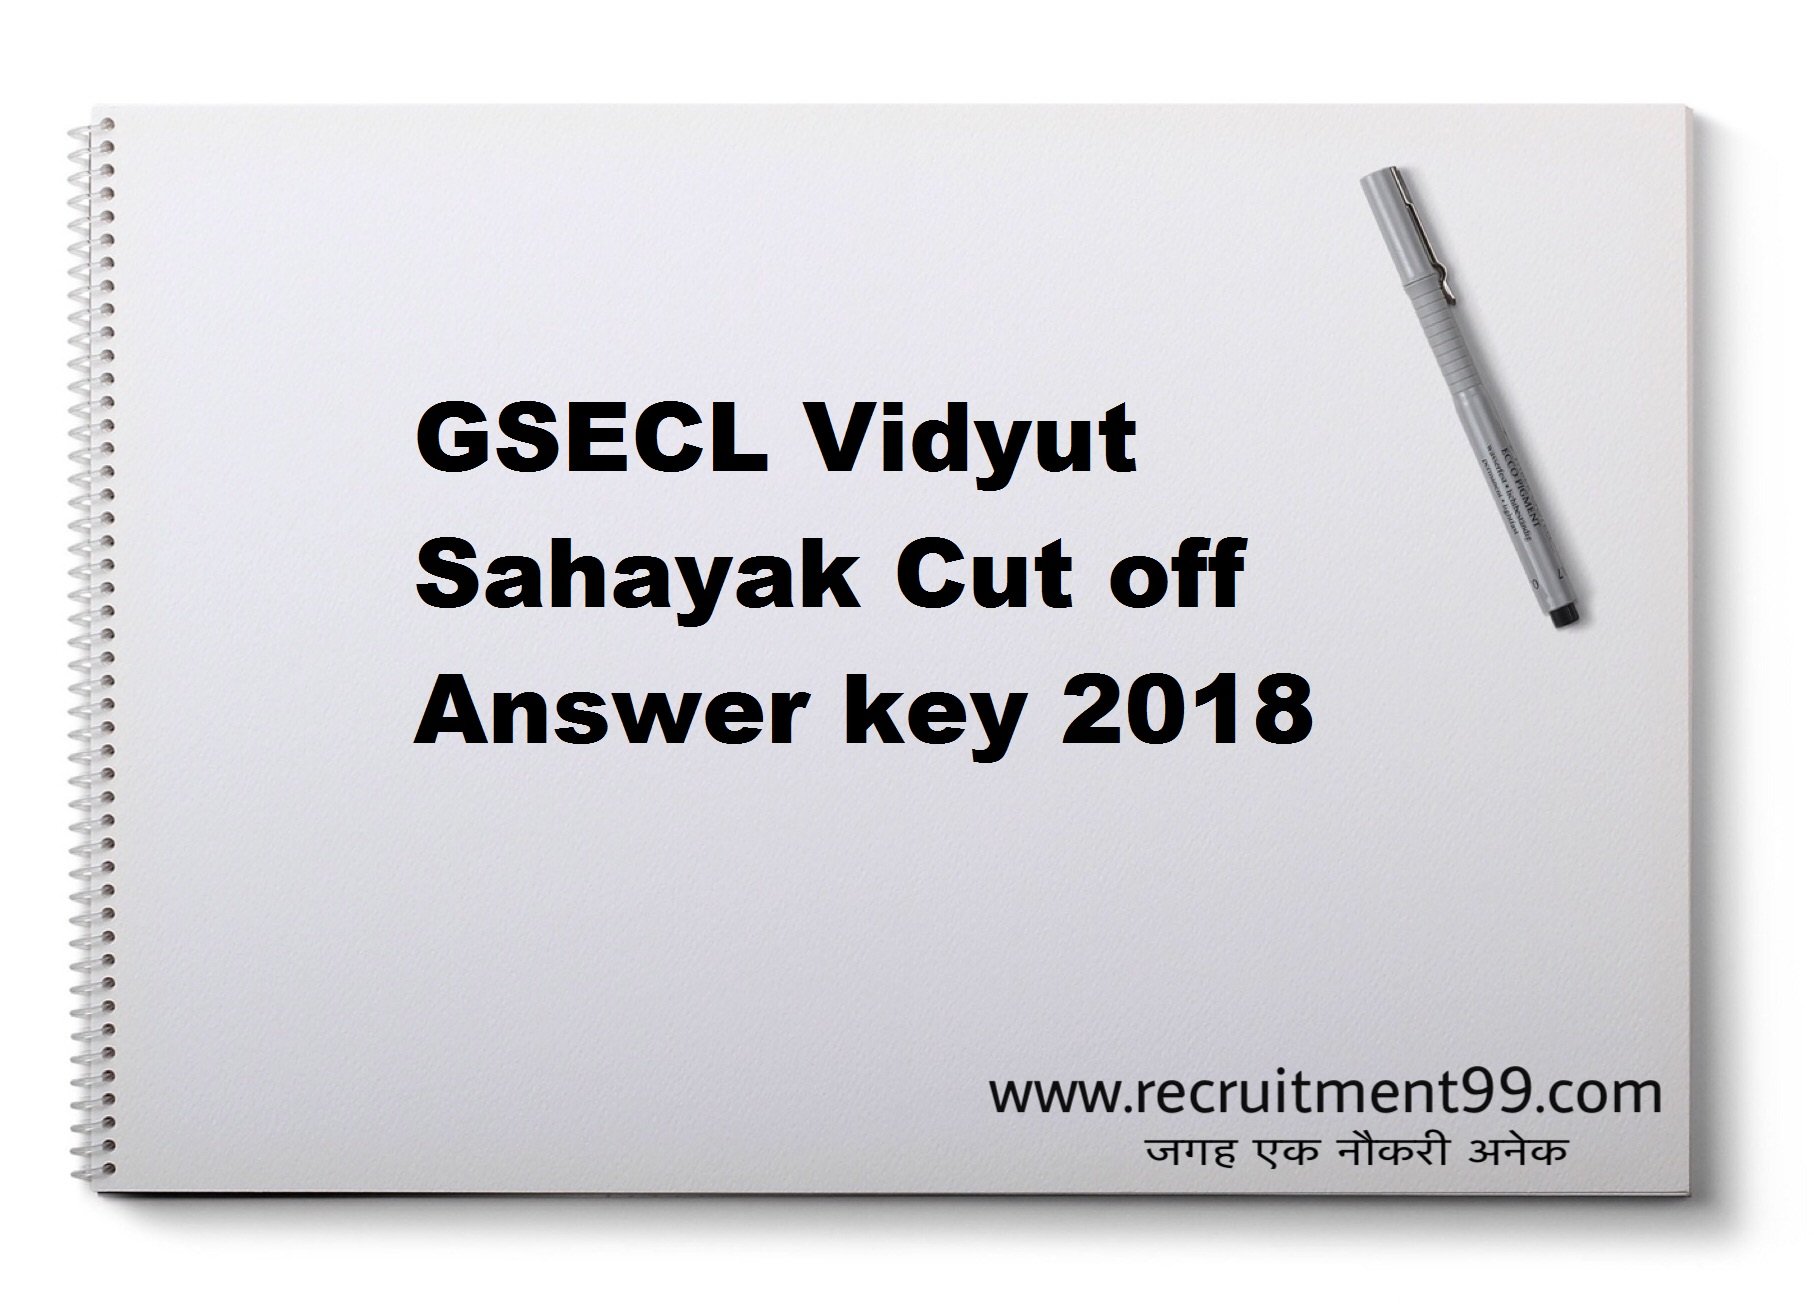 GSECL Vidyut Sahayak Cut off Answer key 2018